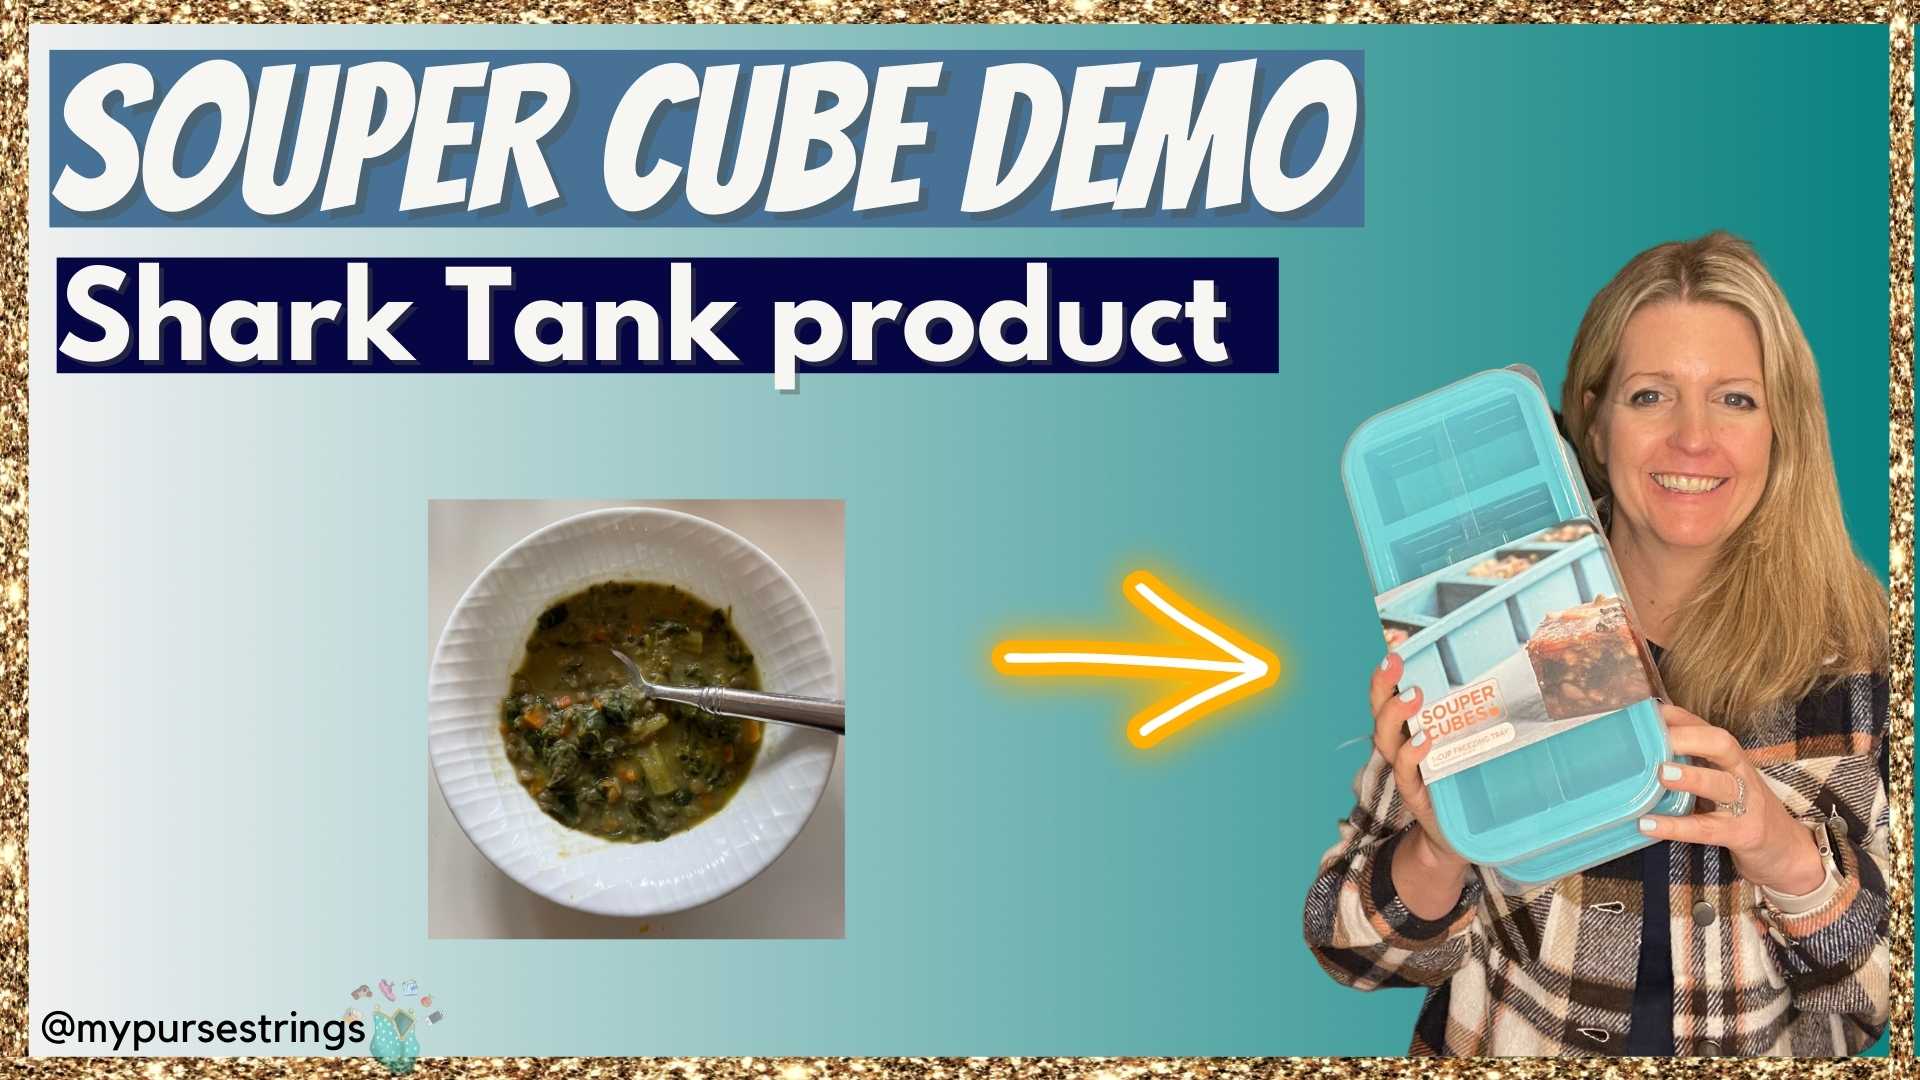 Souper Cubes Food Freezing Tray Shark Tank Season 12